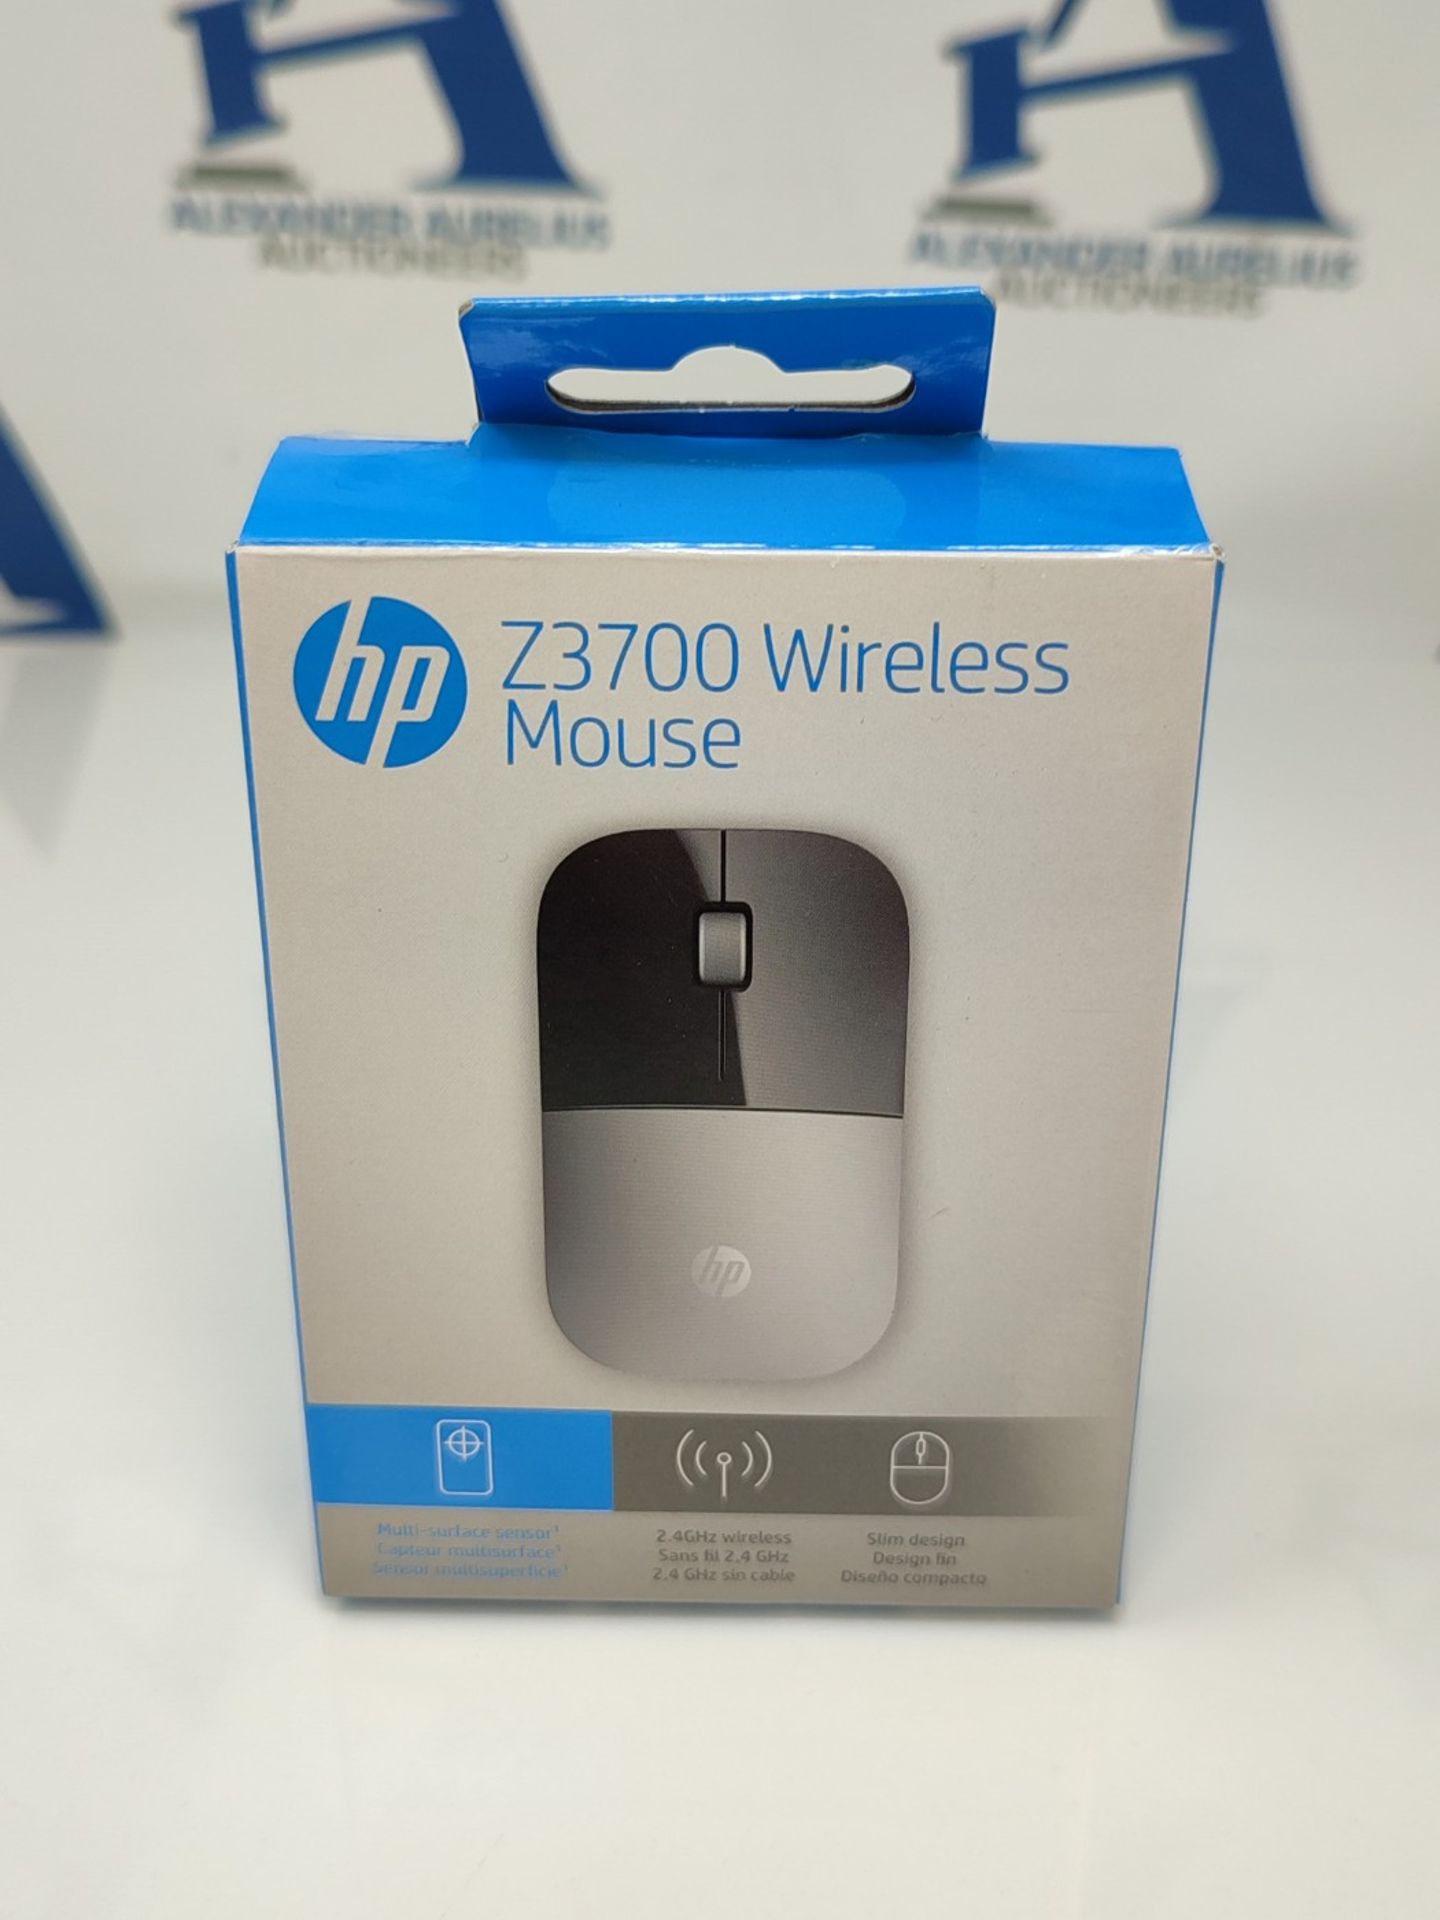 HP Z3700 Wireless Mouse, Precise Sensor, Blue LED Technology, 1200 DPI, 3 Buttons, Scr - Image 2 of 3